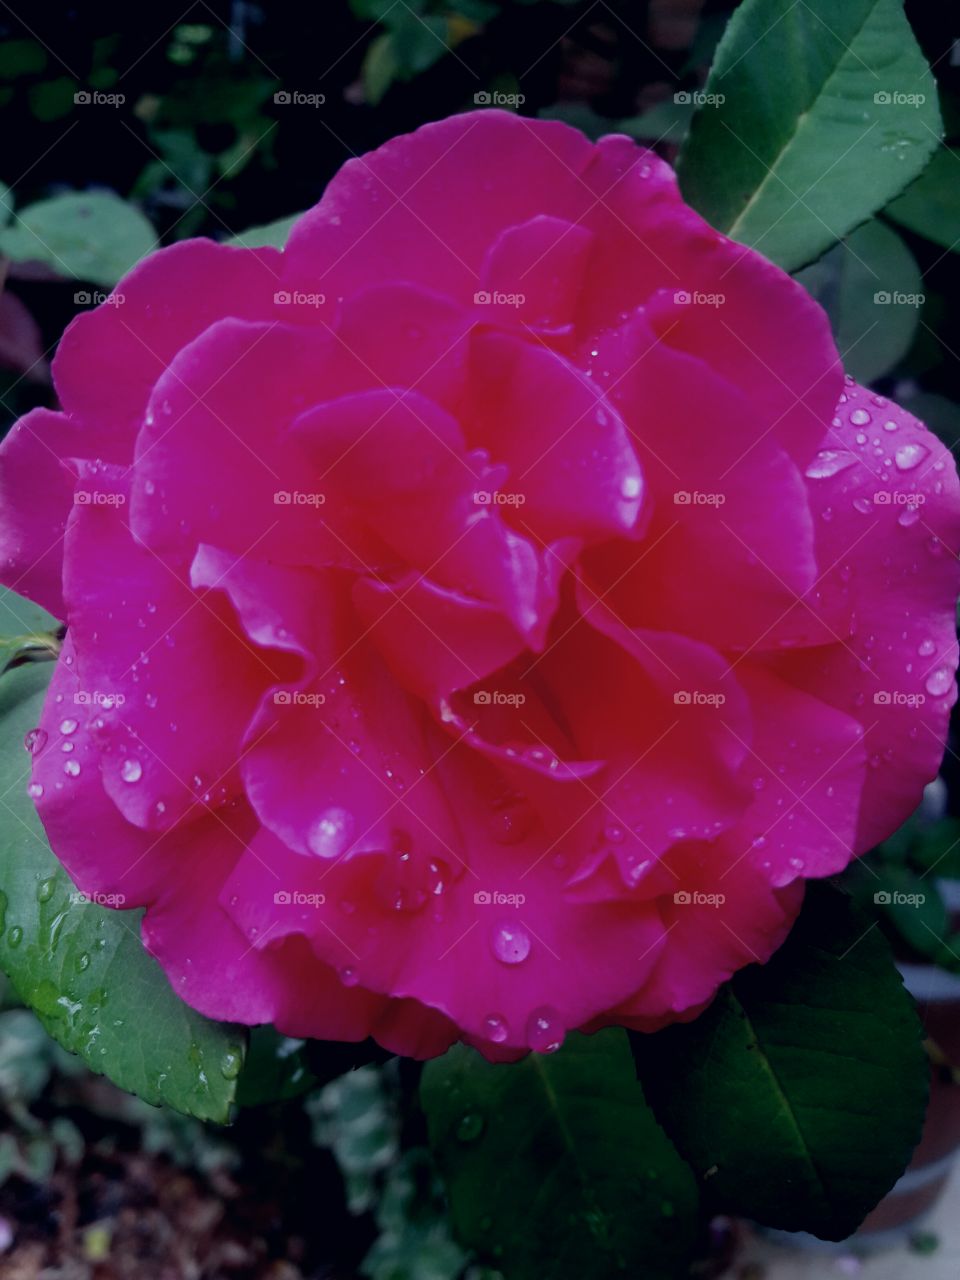 dew drop rose